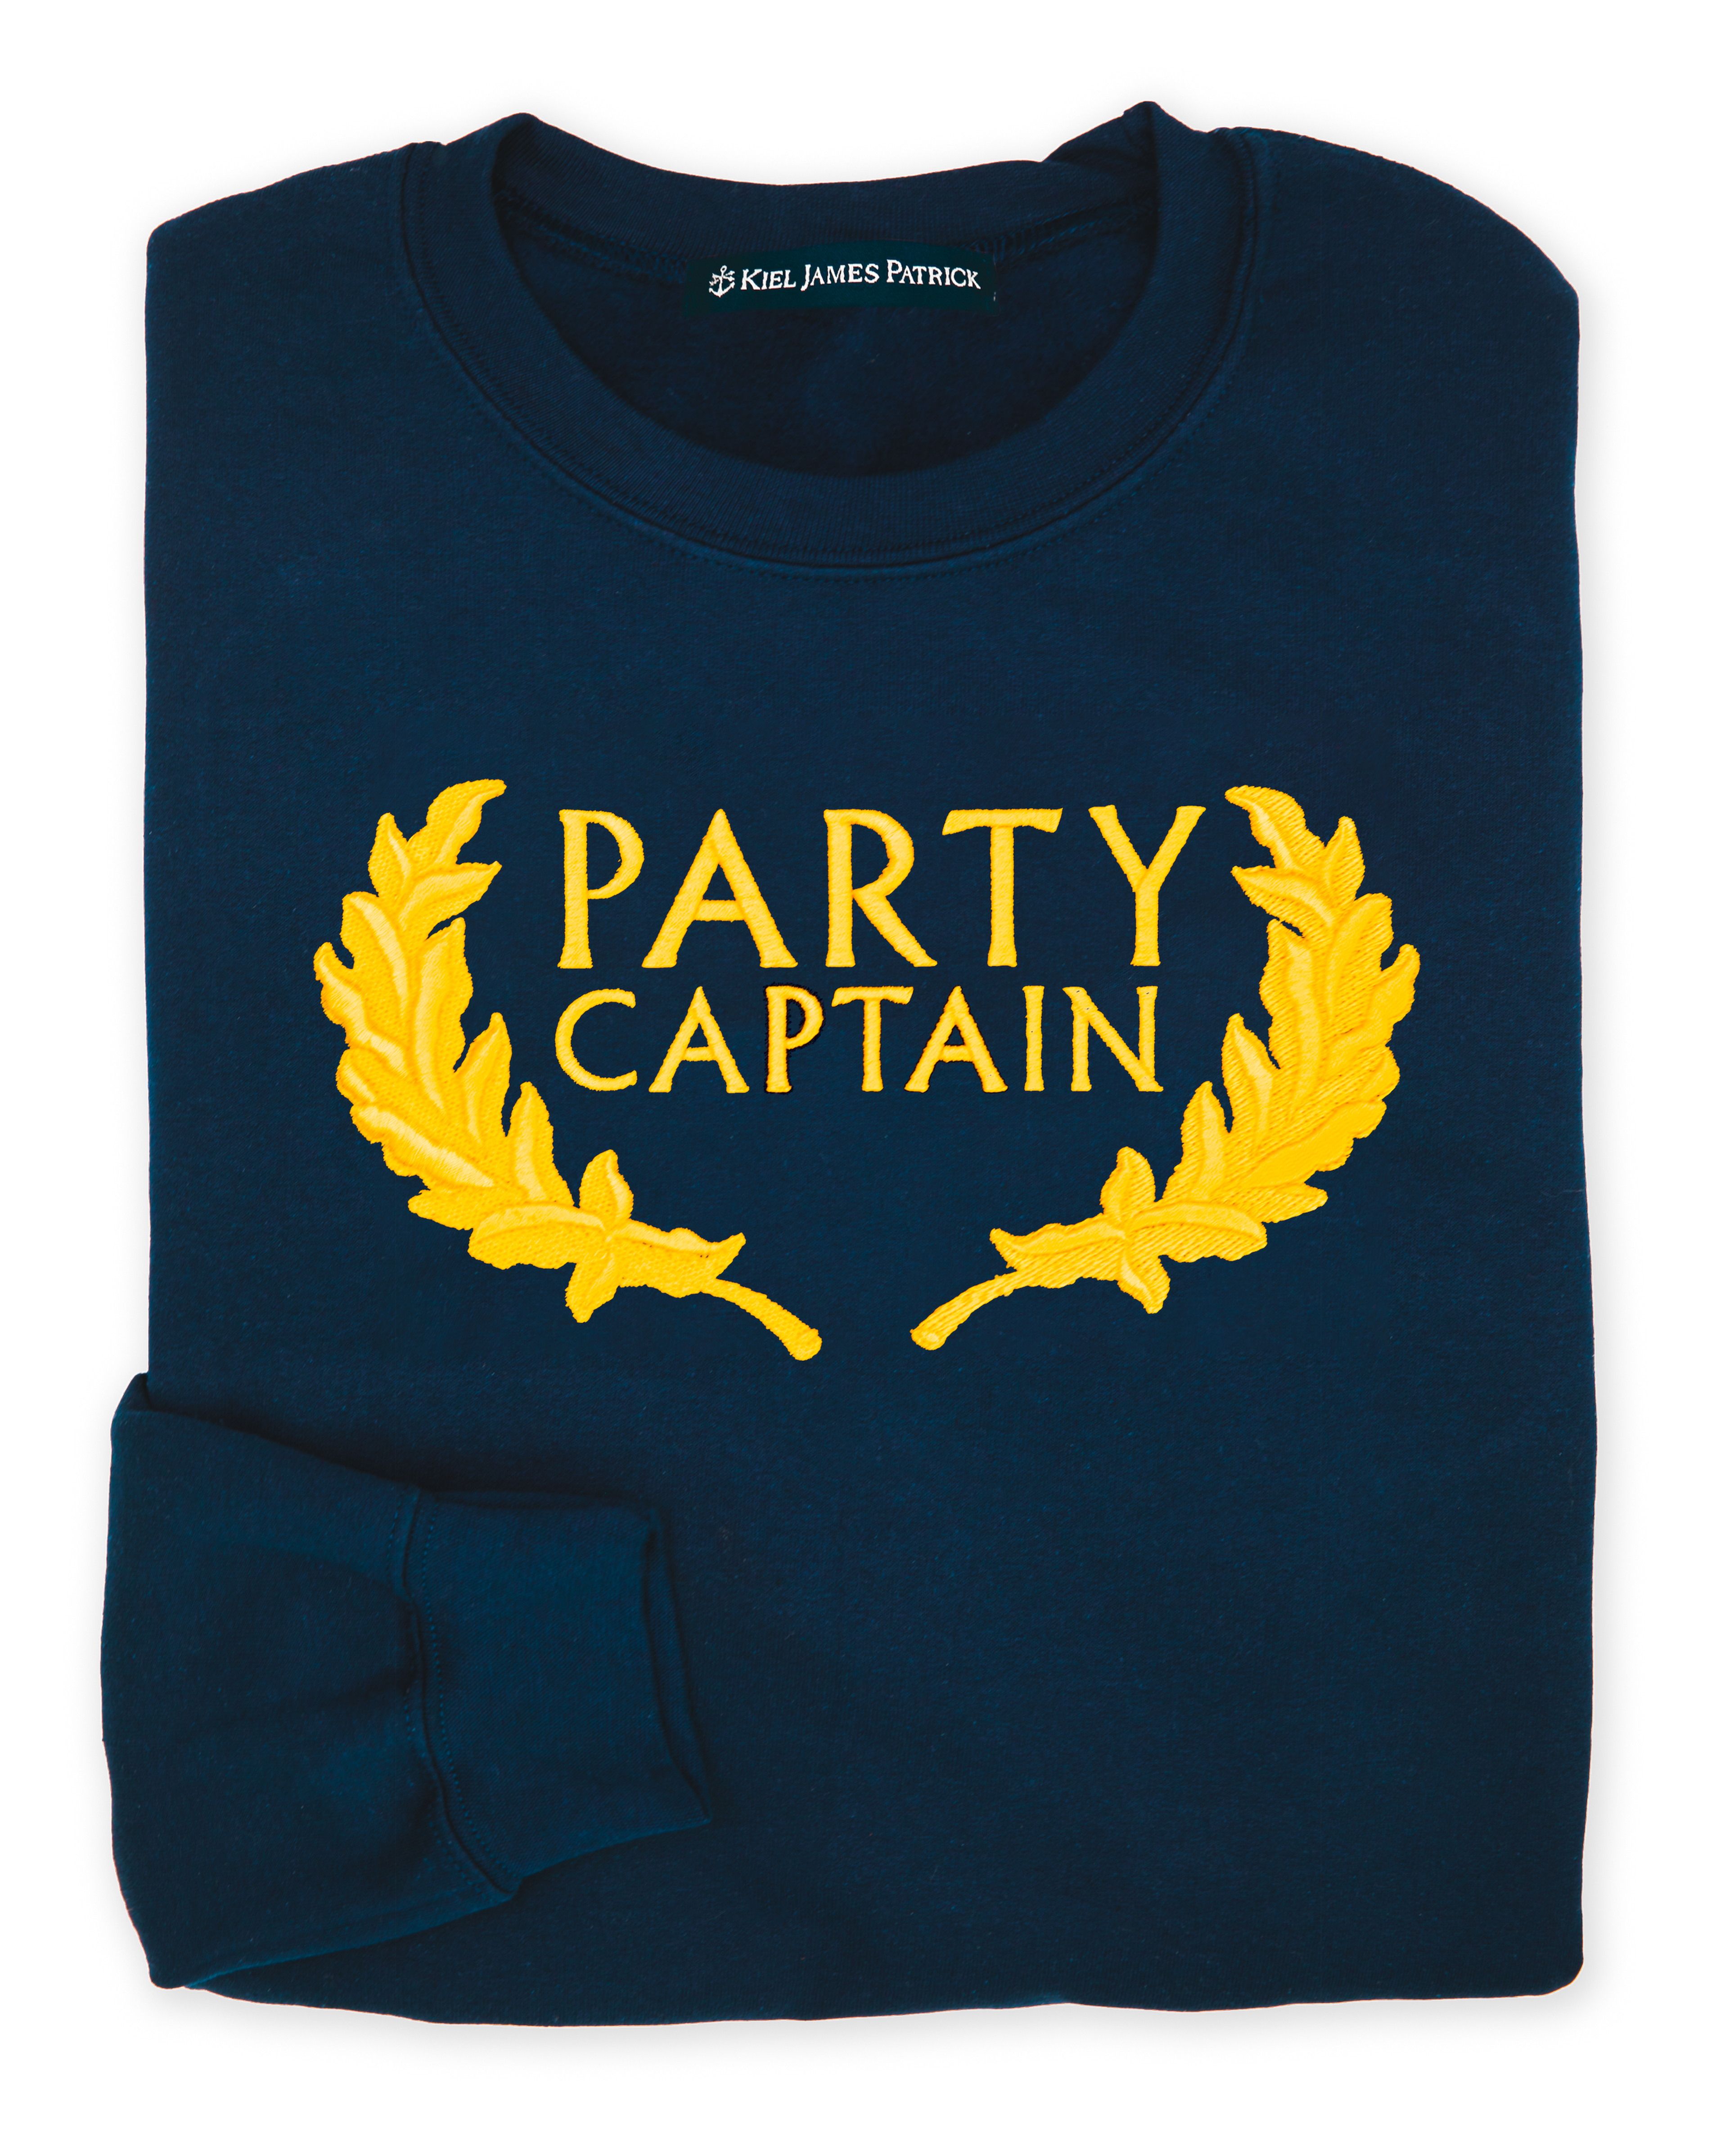 The Party Captain Sweatshirt